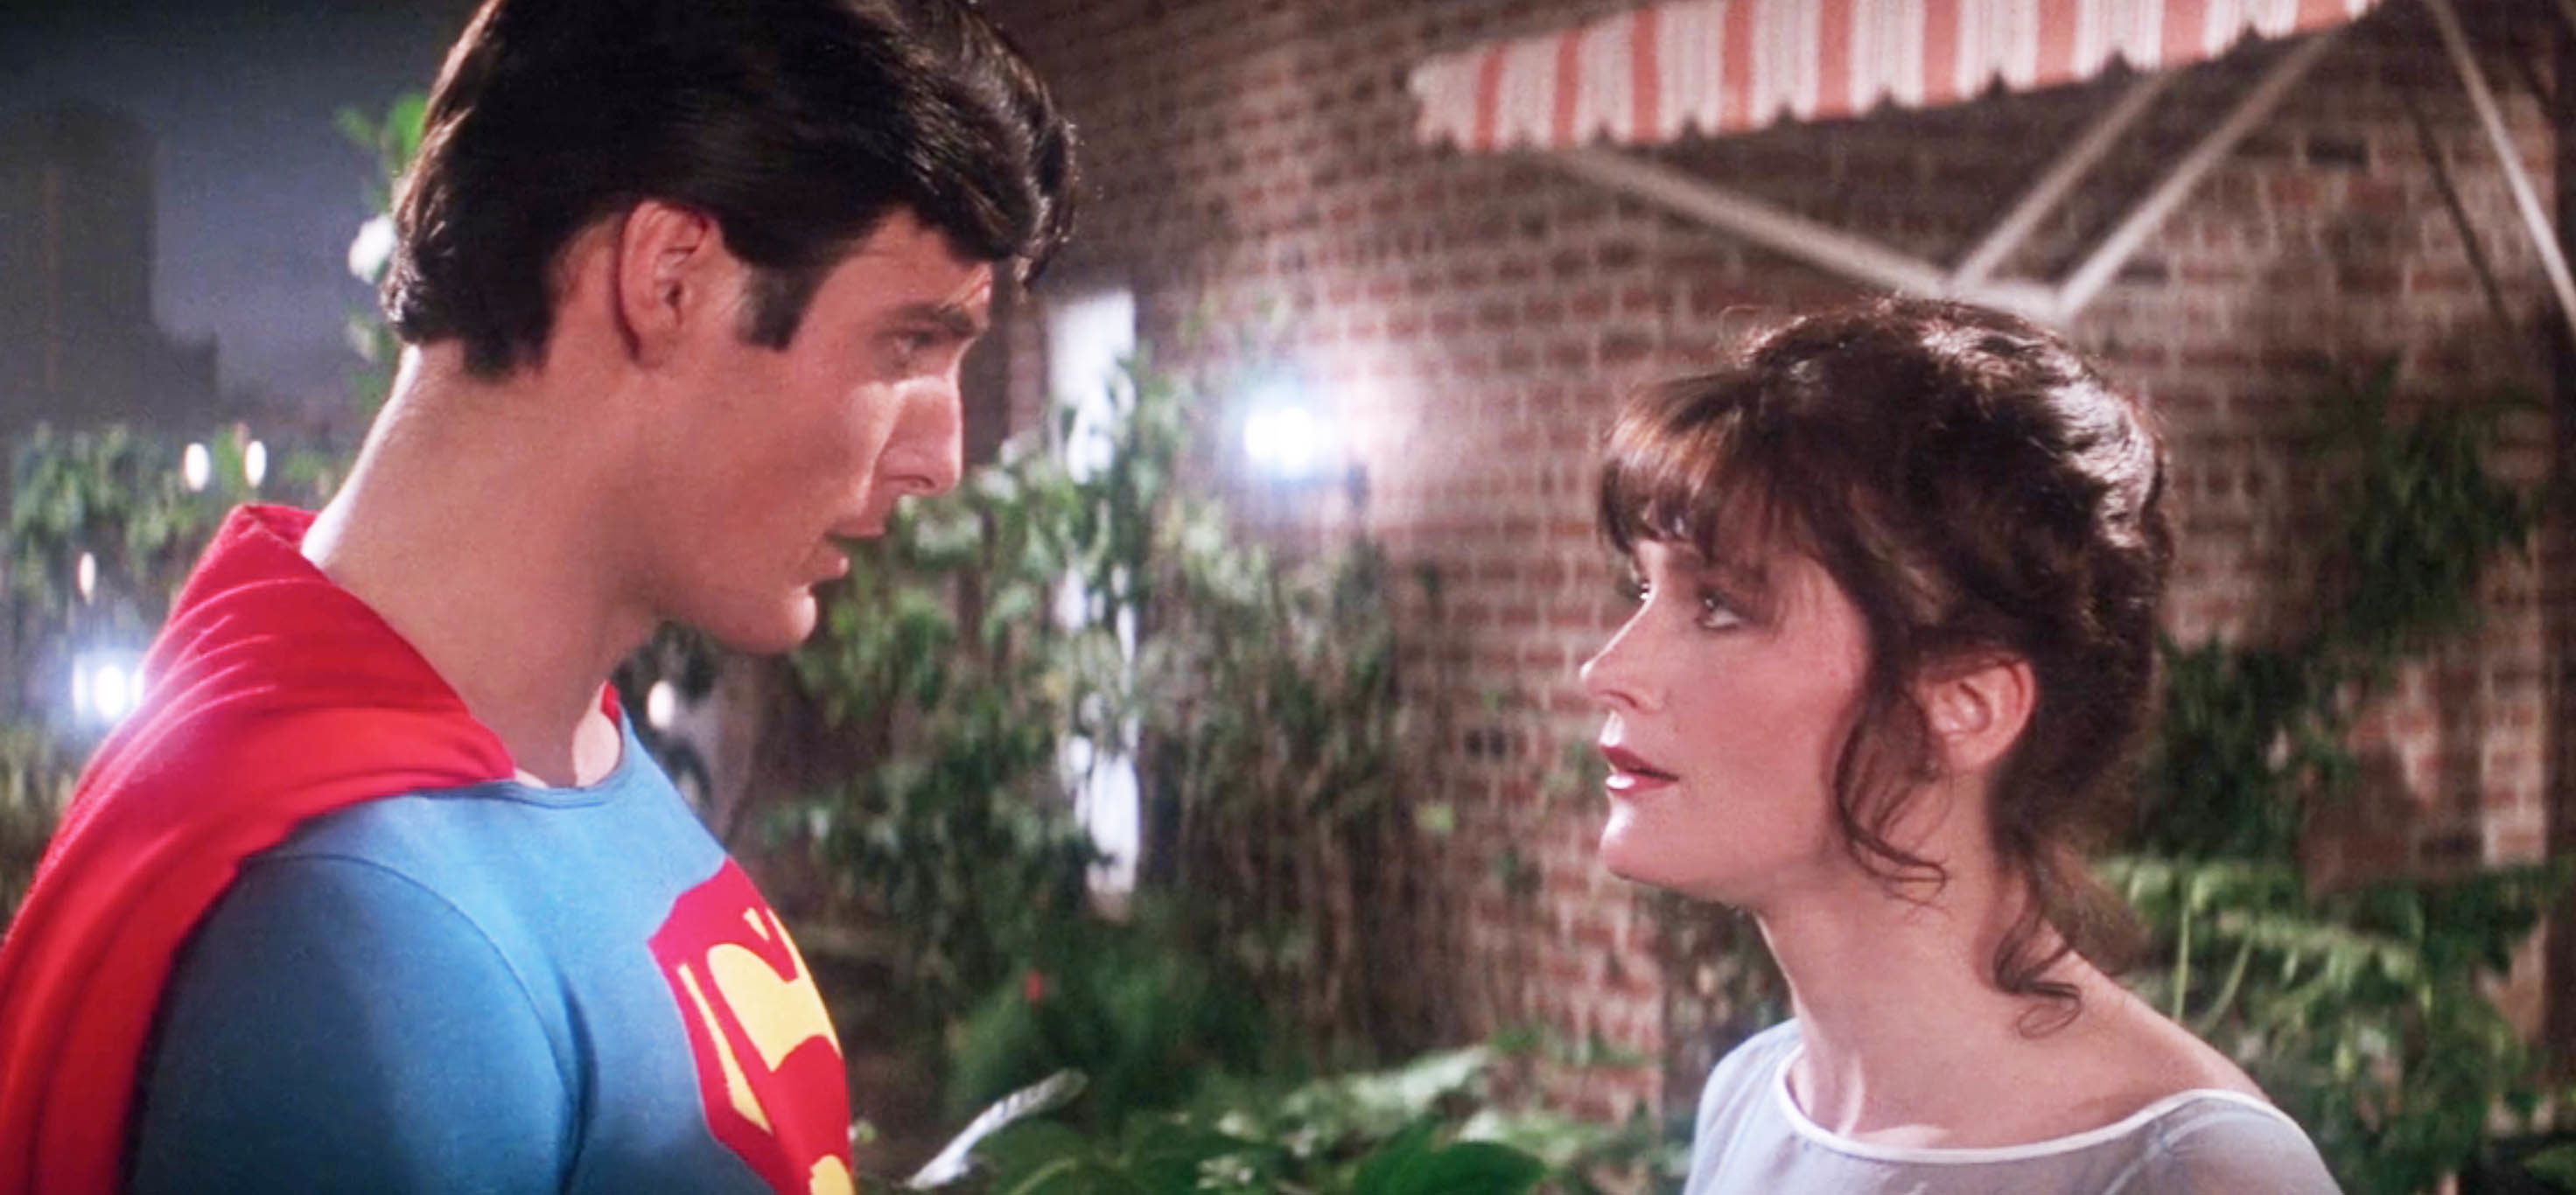 Christopher Reeve as Superman talking to Margot Kidder who played Lois Lane